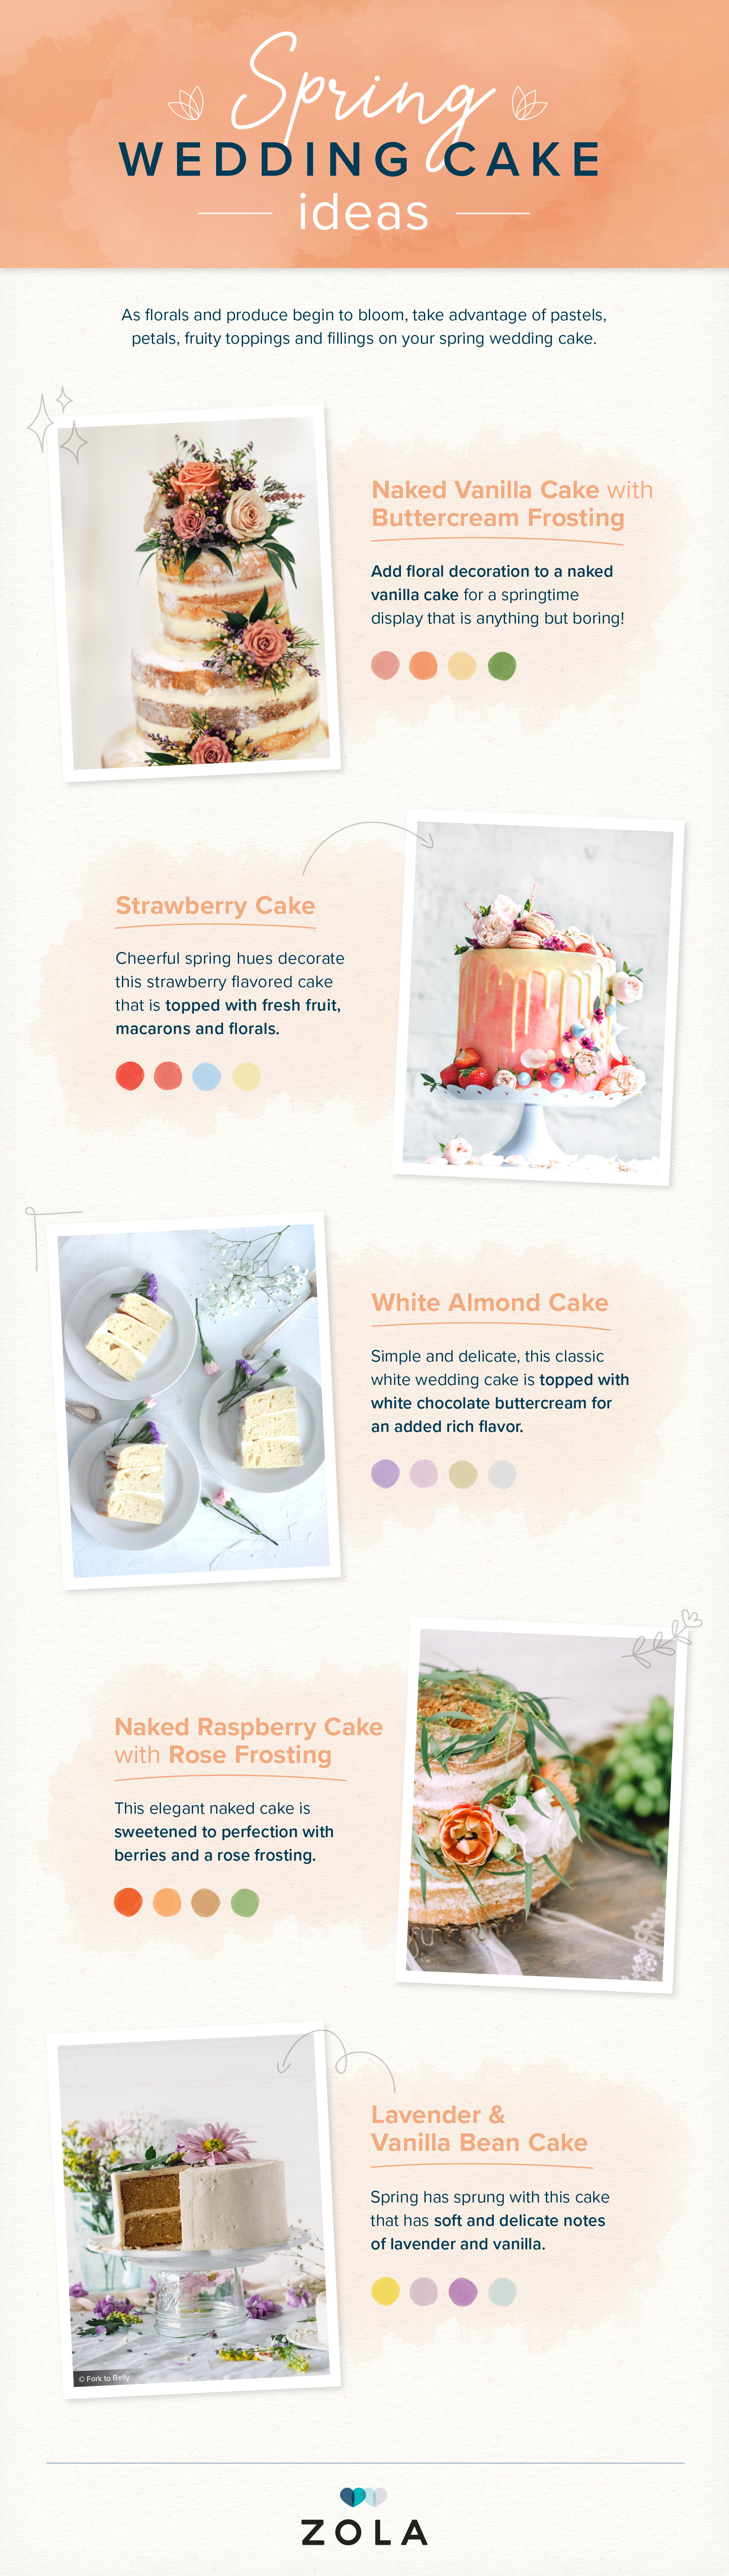 112 Wedding Cake Ideas Designs Zola Expert Wedding Advice,Beautiful Bathroom Designs